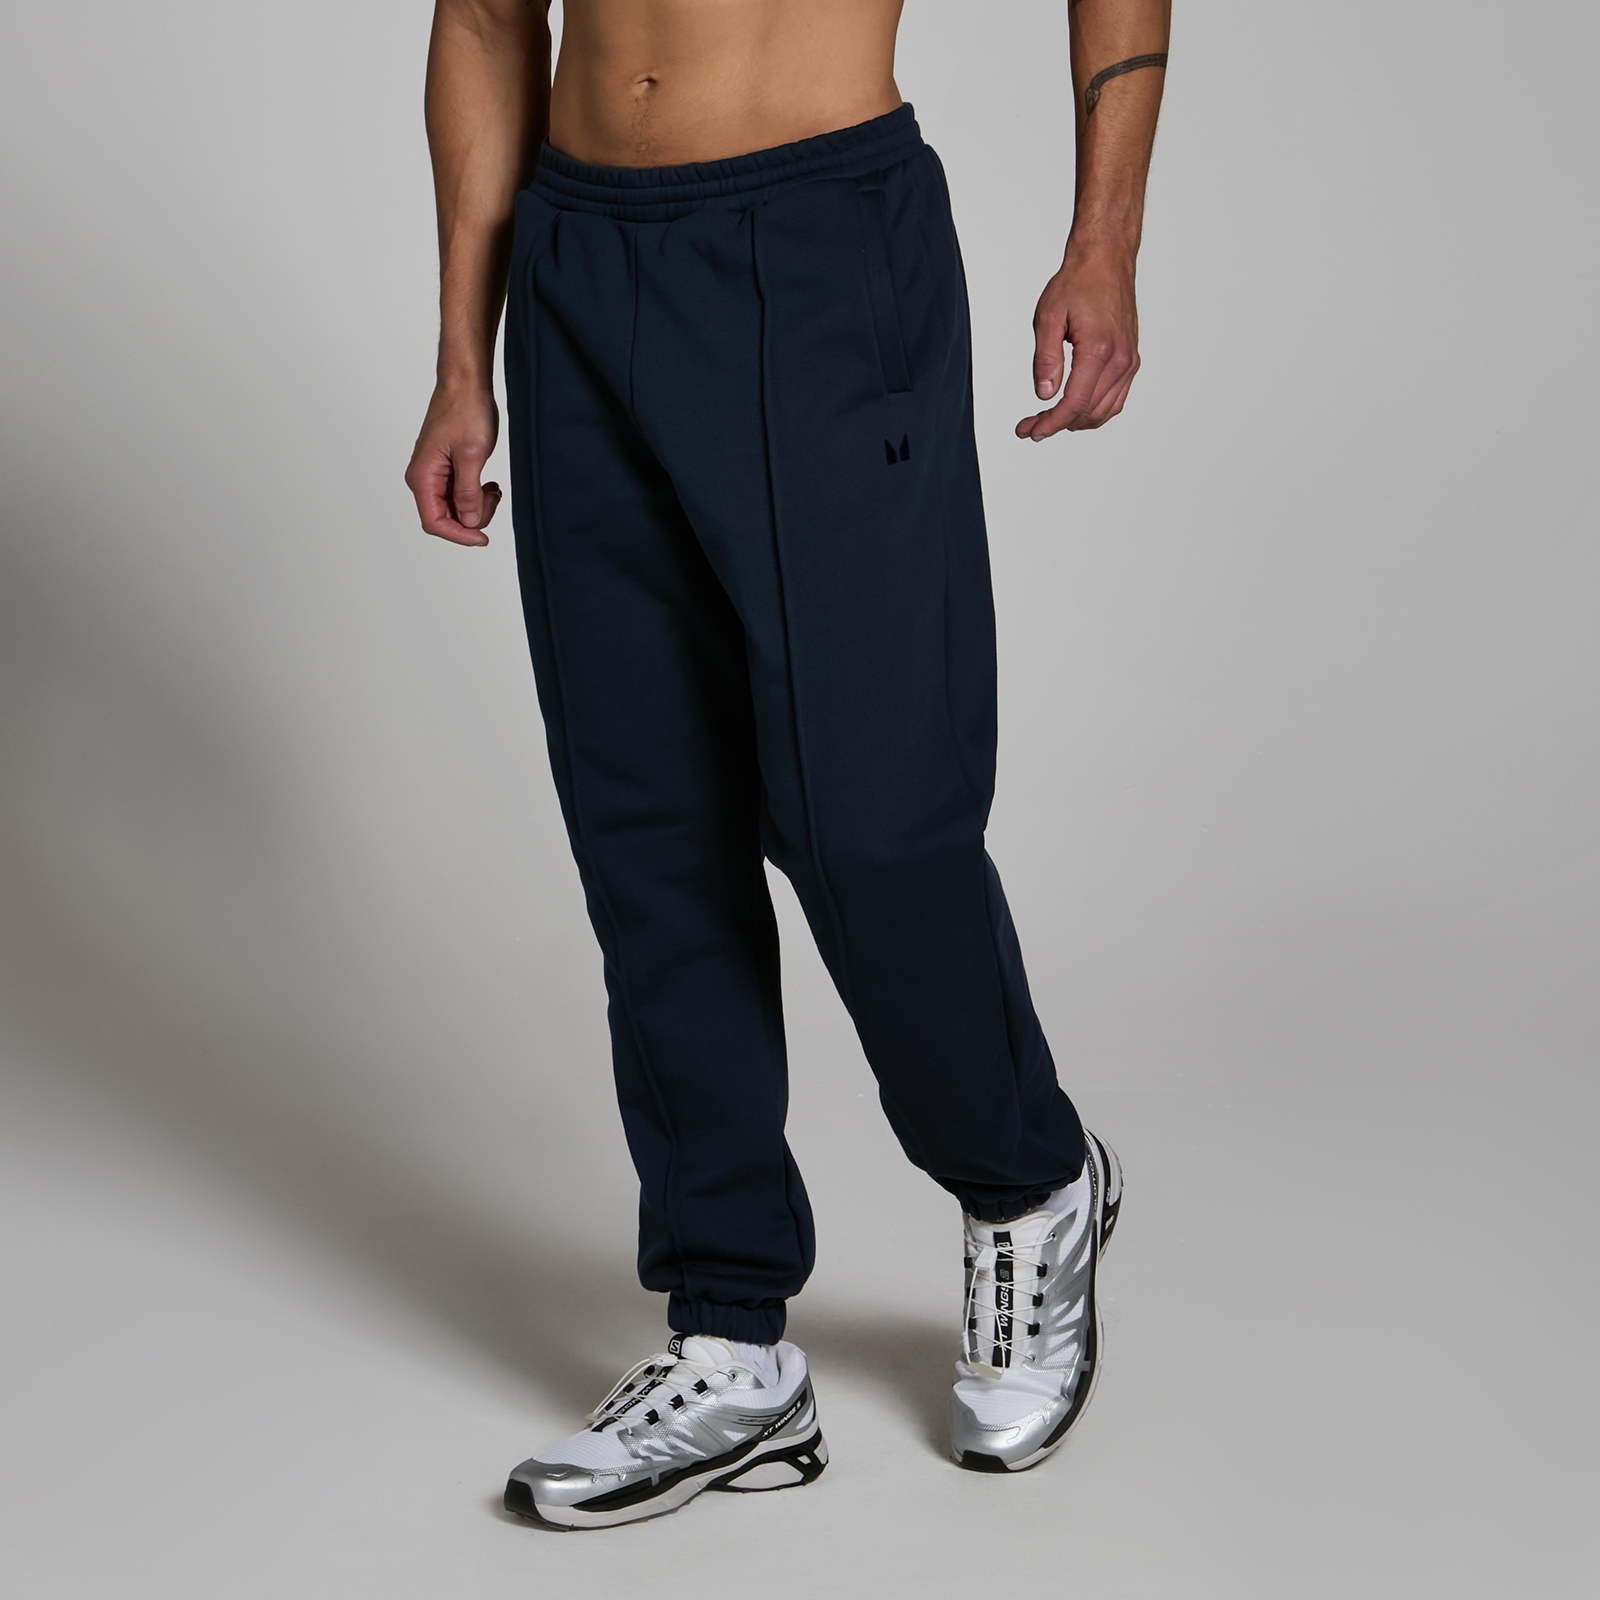 Image of Pantaloni da jogging pesanti oversize MP Lifestyle da uomo - Blu navy scuro - M